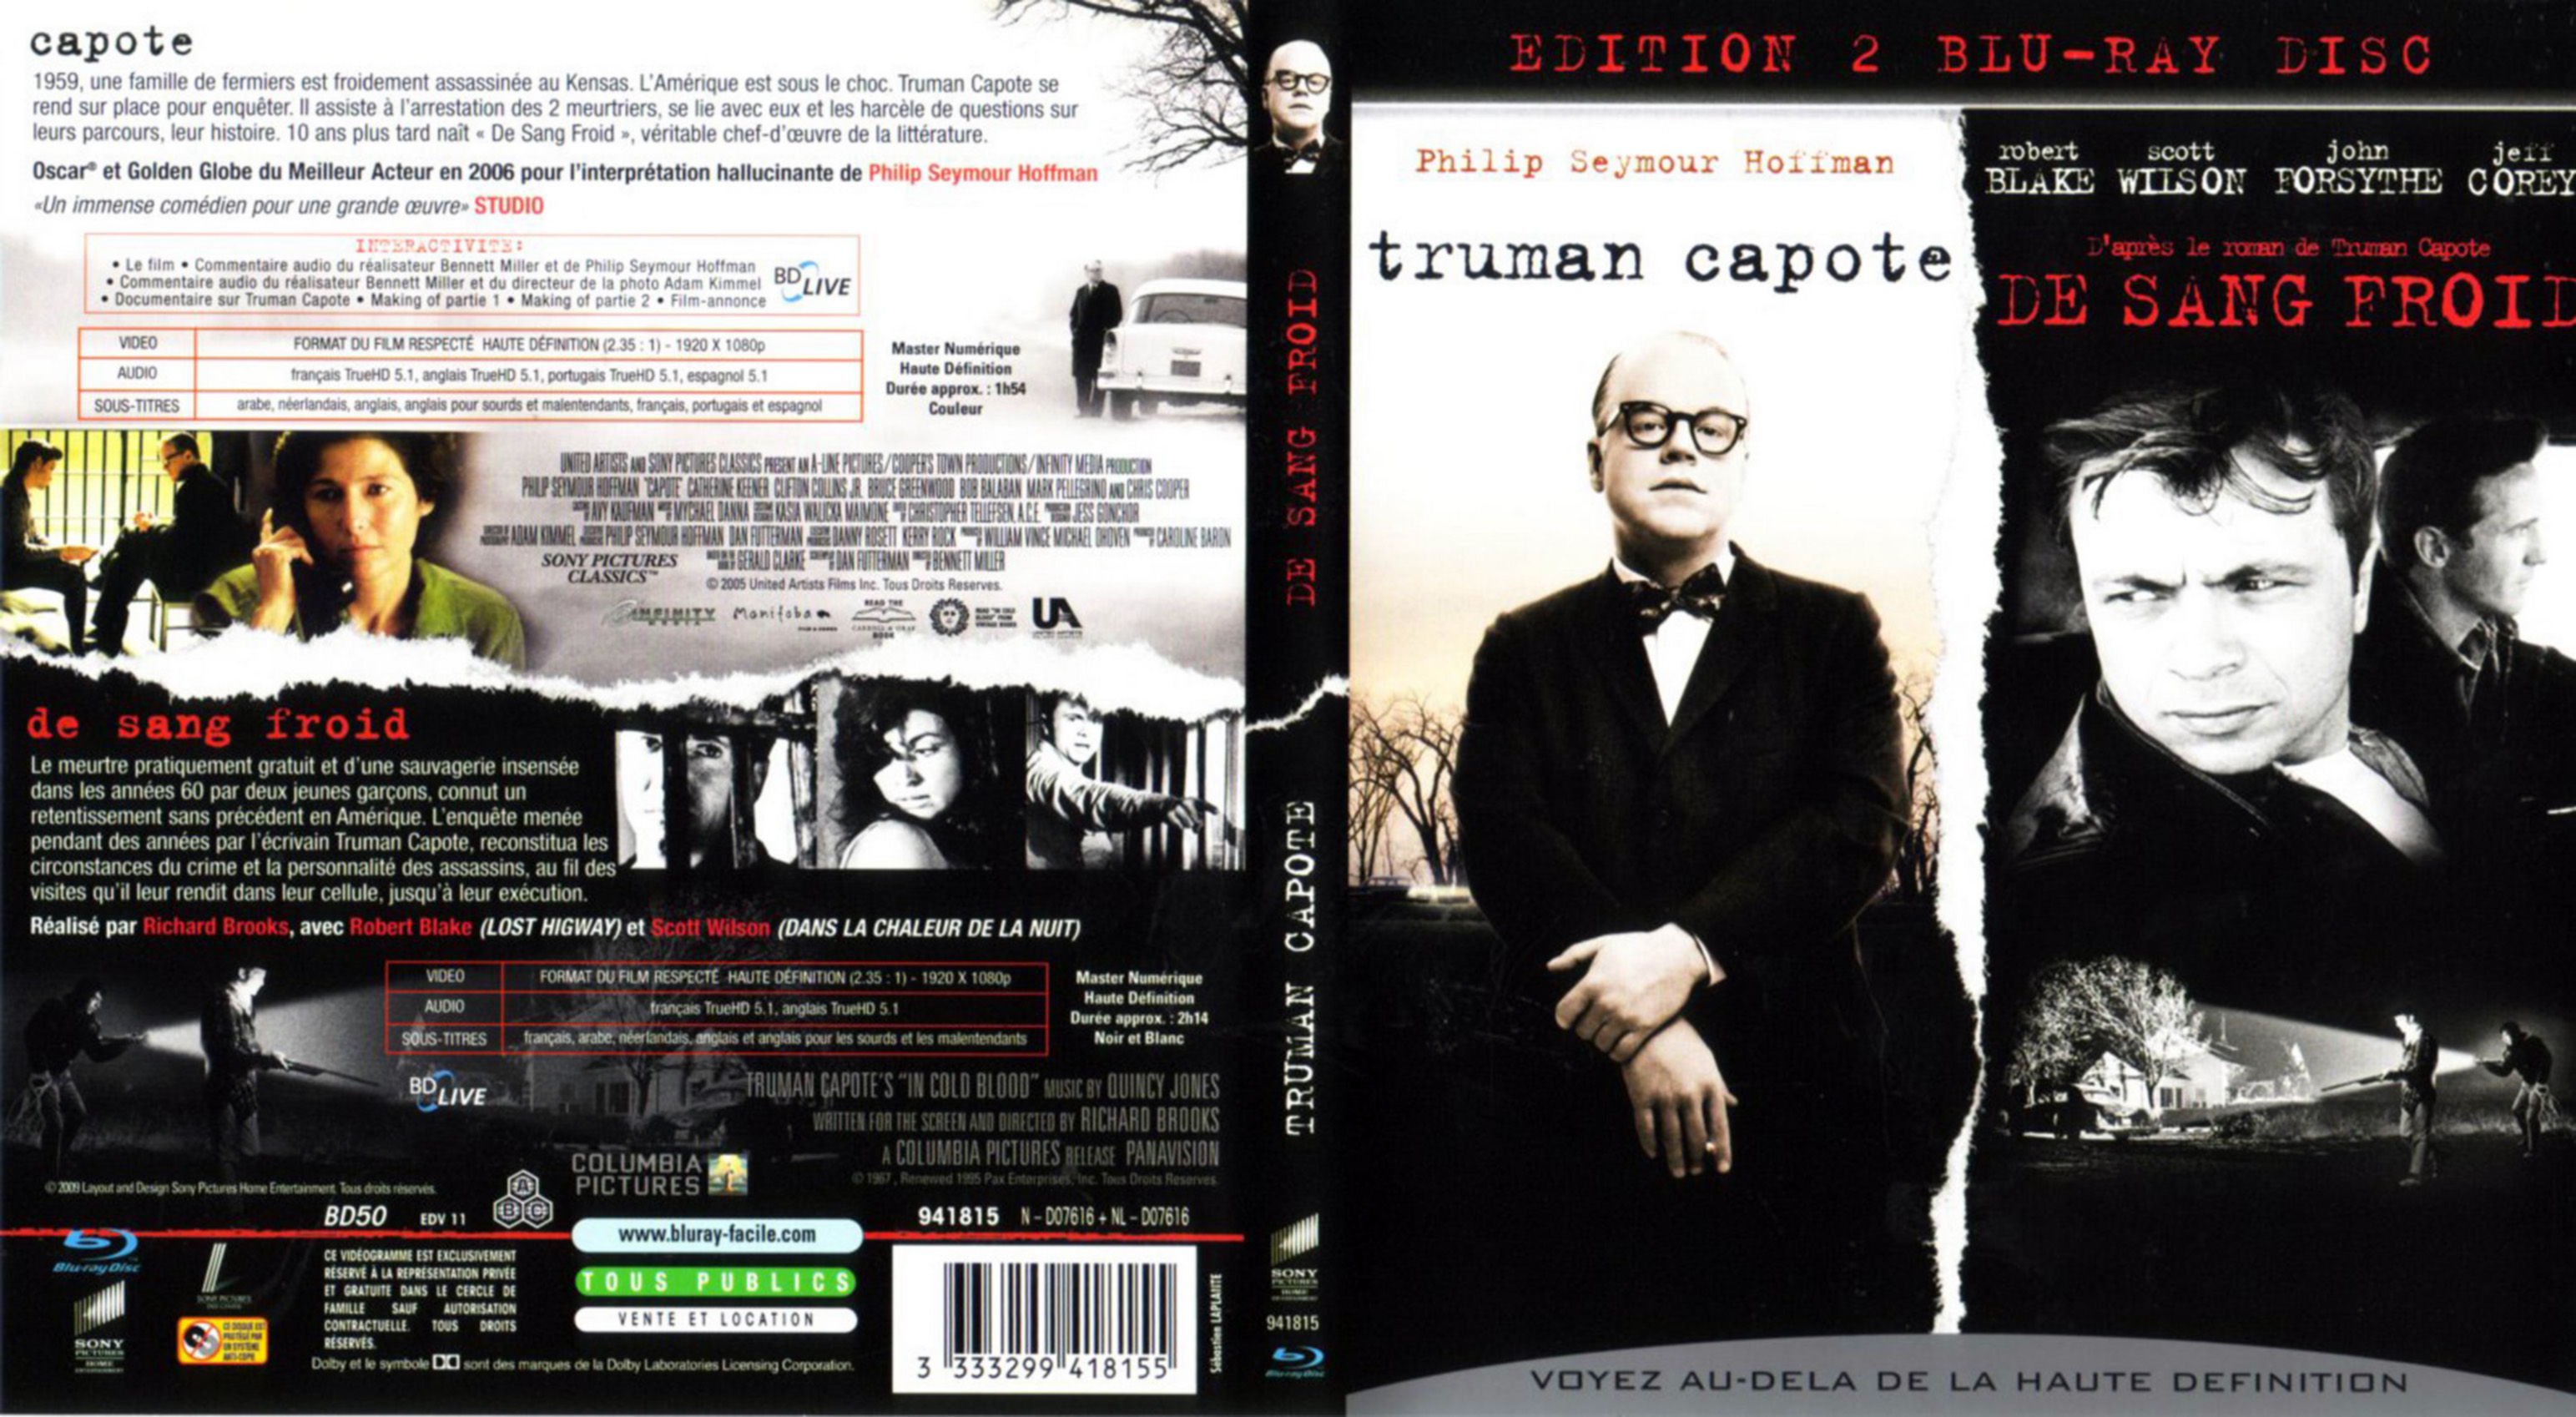 Jaquette DVD Truman Capote + De sang froid (BLU-RAY)